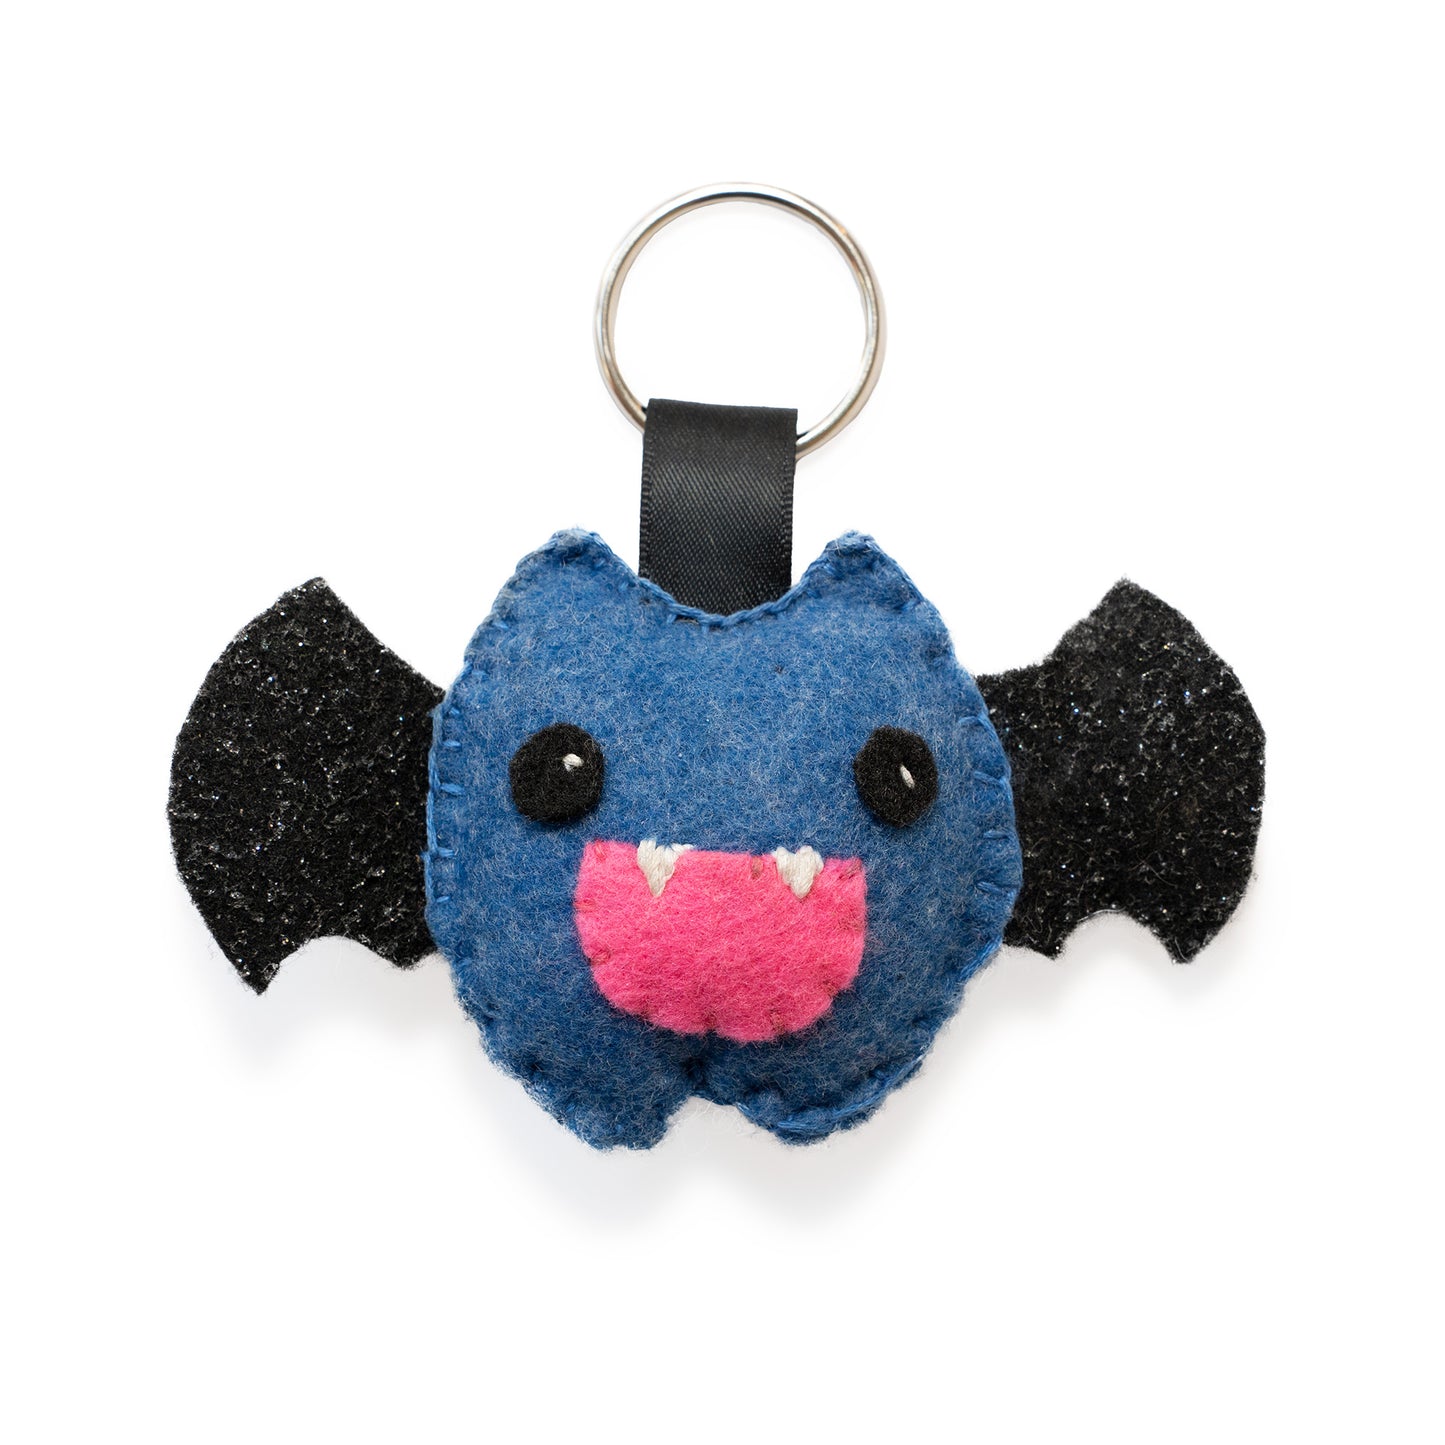 Felt Bat Keychain